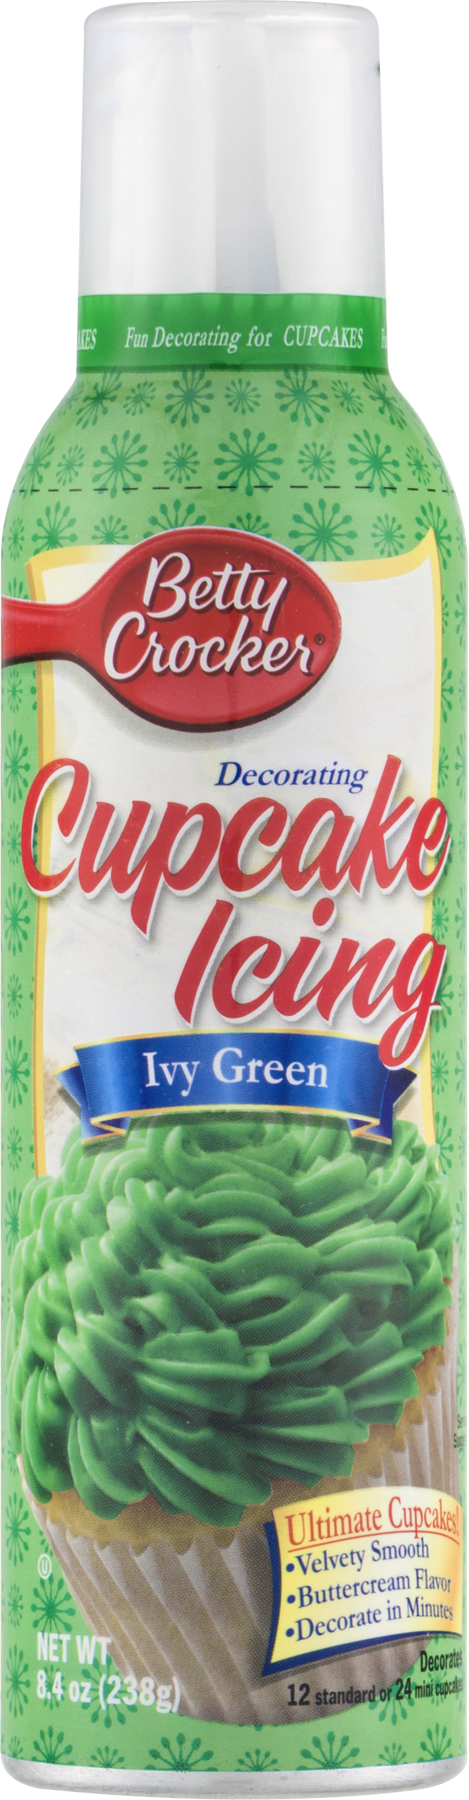 Betty Crocker Cupcake Icing Ivy Green, 8.4 OZ - image 2 of 9